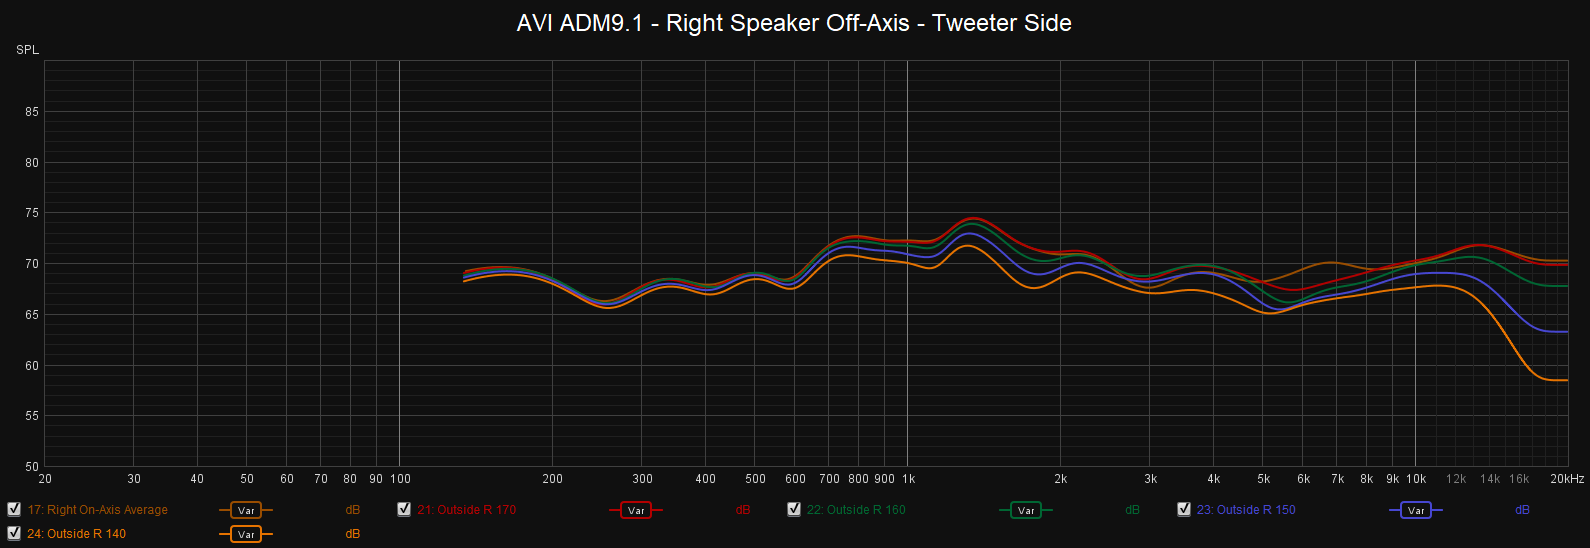 AVI ADM9.1 - Right Speaker Off Axis - Tweeter Side.png